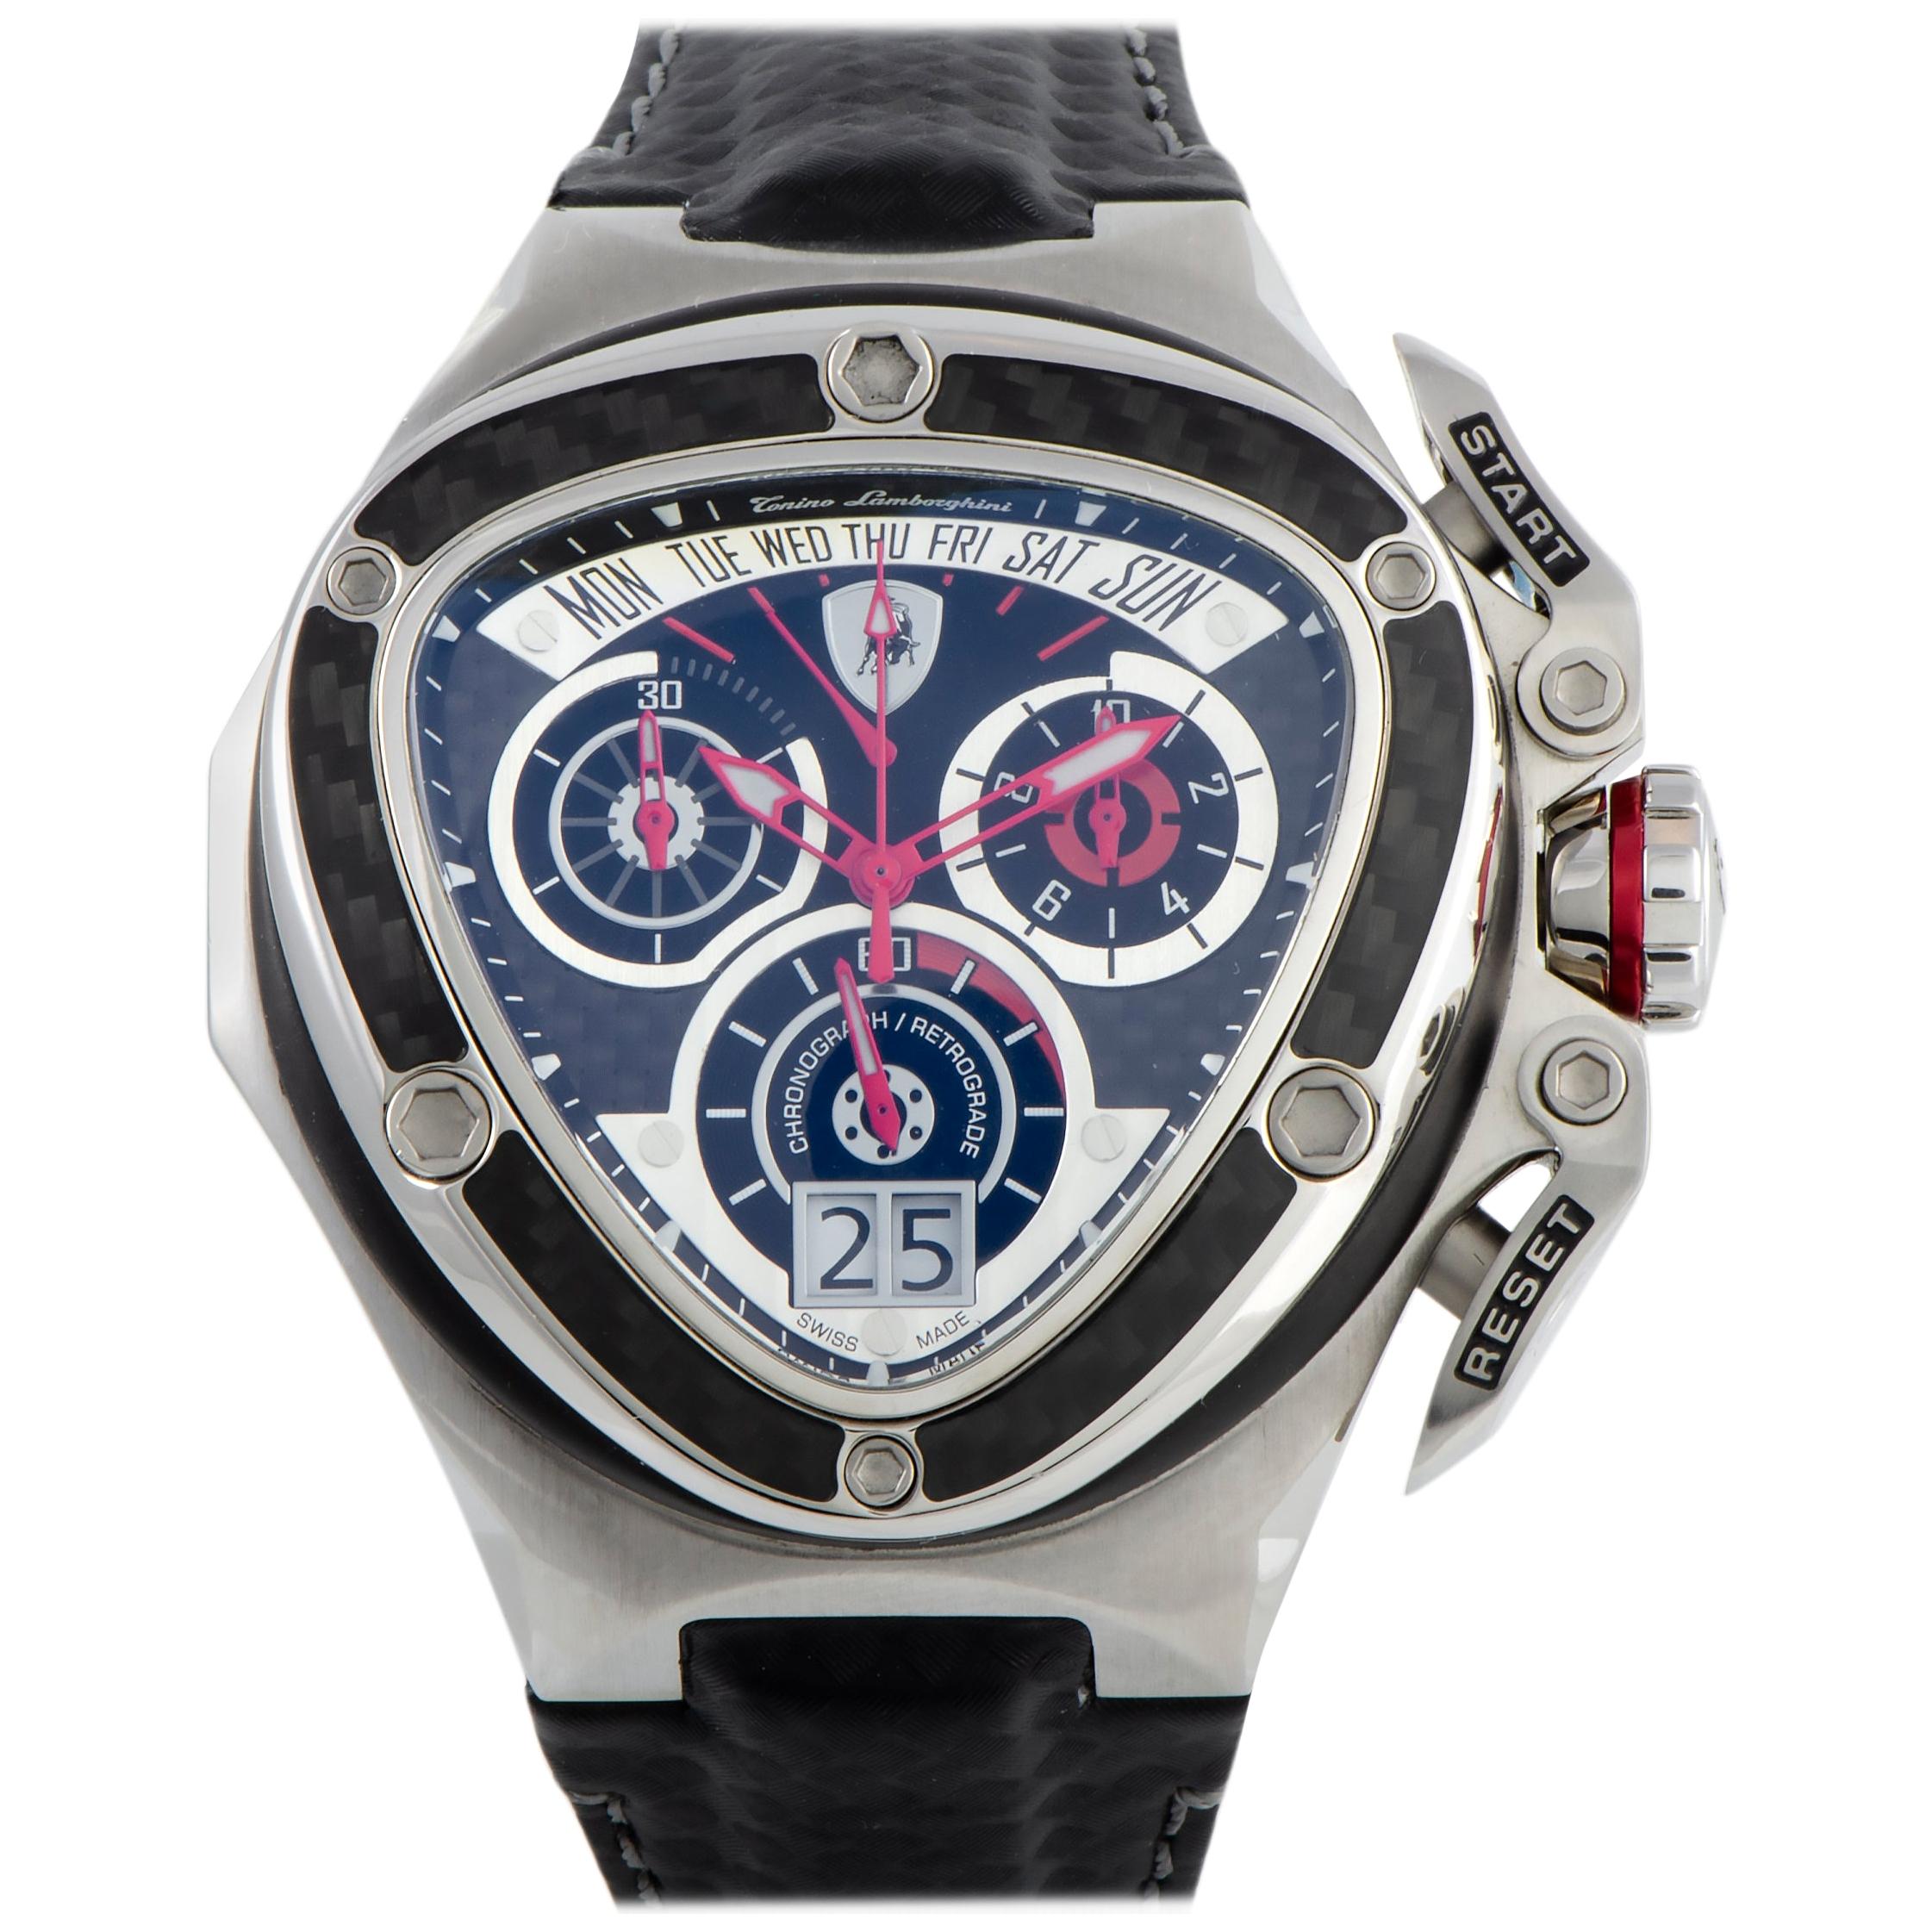 Tonino Lamborghini Spyder Chronograph Watch 3020